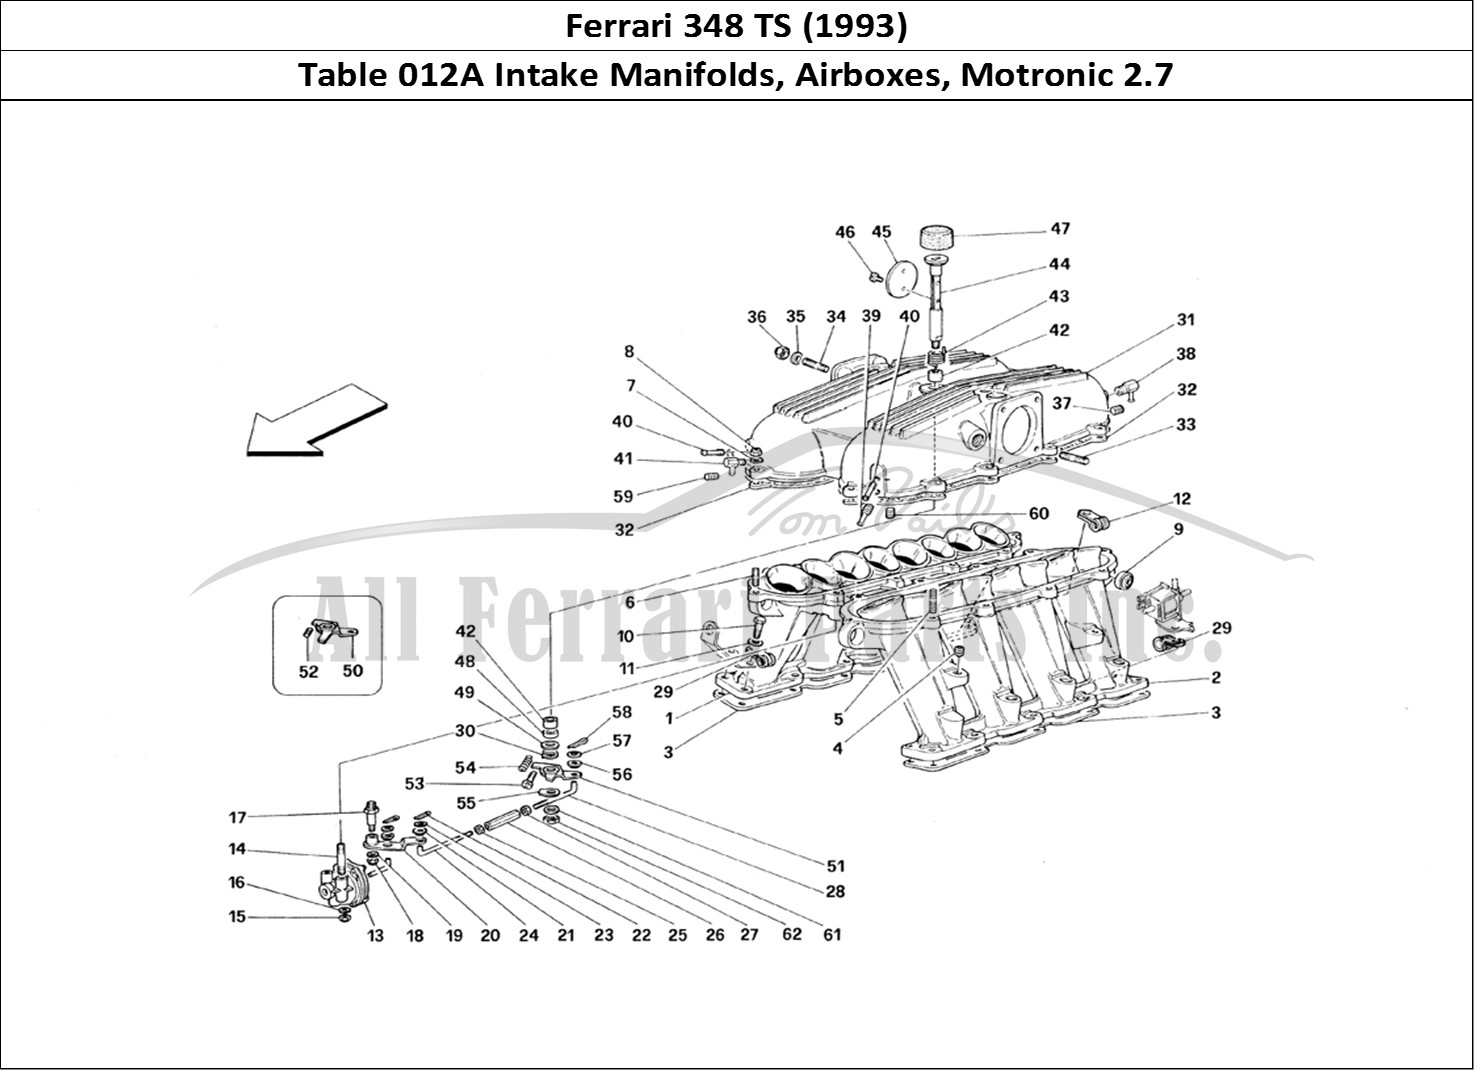 Ferrari Parts Ferrari 348 TB (1993) Page 012 Manifolds and Covers - Mo